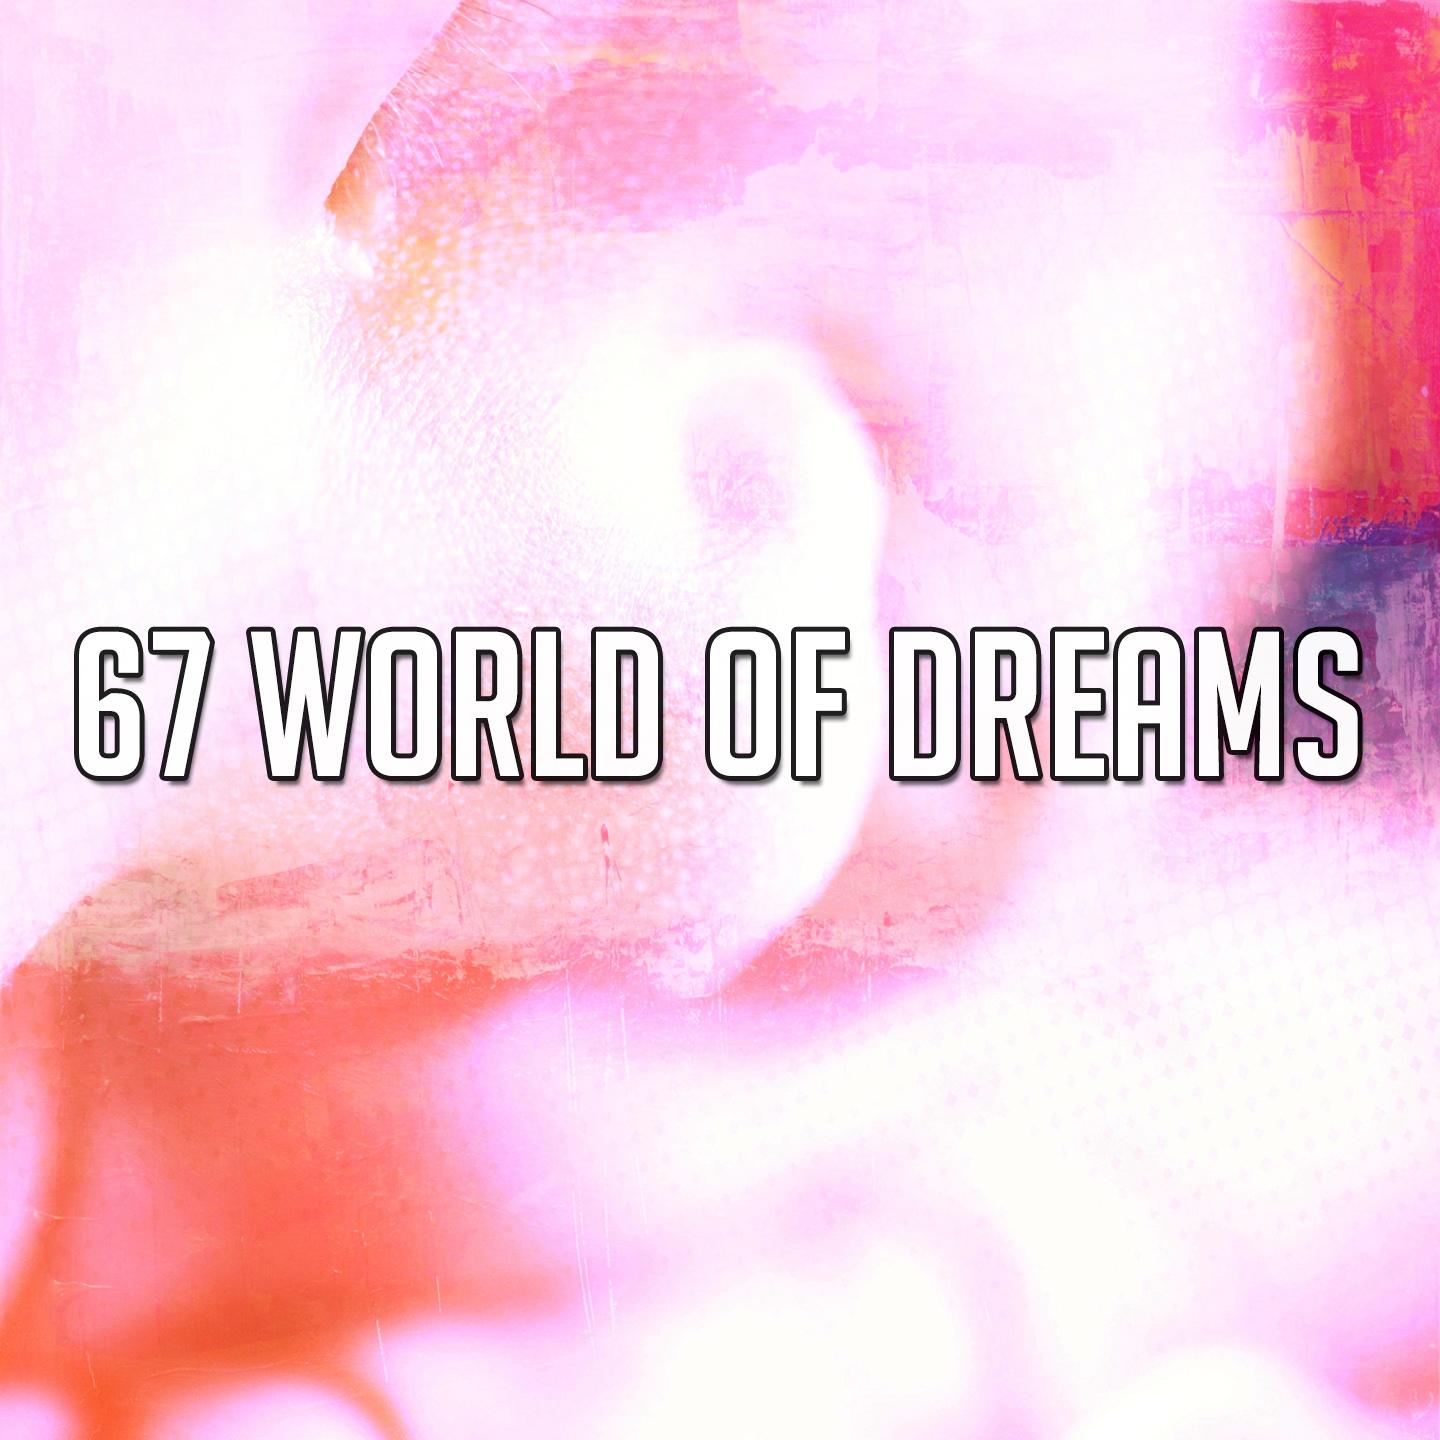 67 World of Dreams